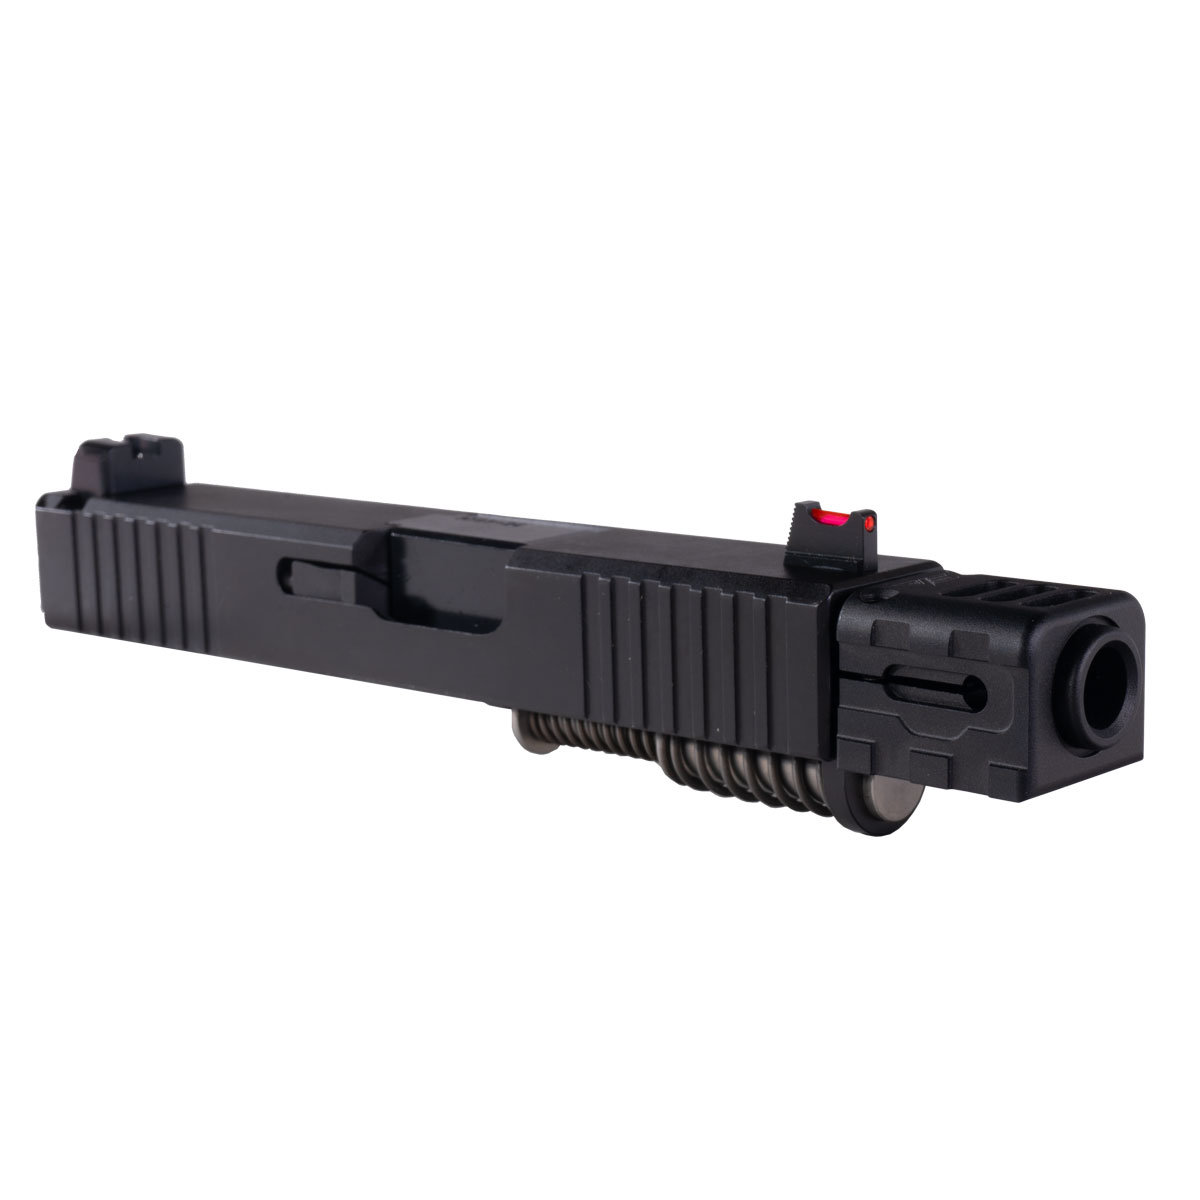 DD 'Simum w/ Sylvan Arms Compensator' 9mm Complete Slide Kit - Glock 26 Gen 1-2 Compatible